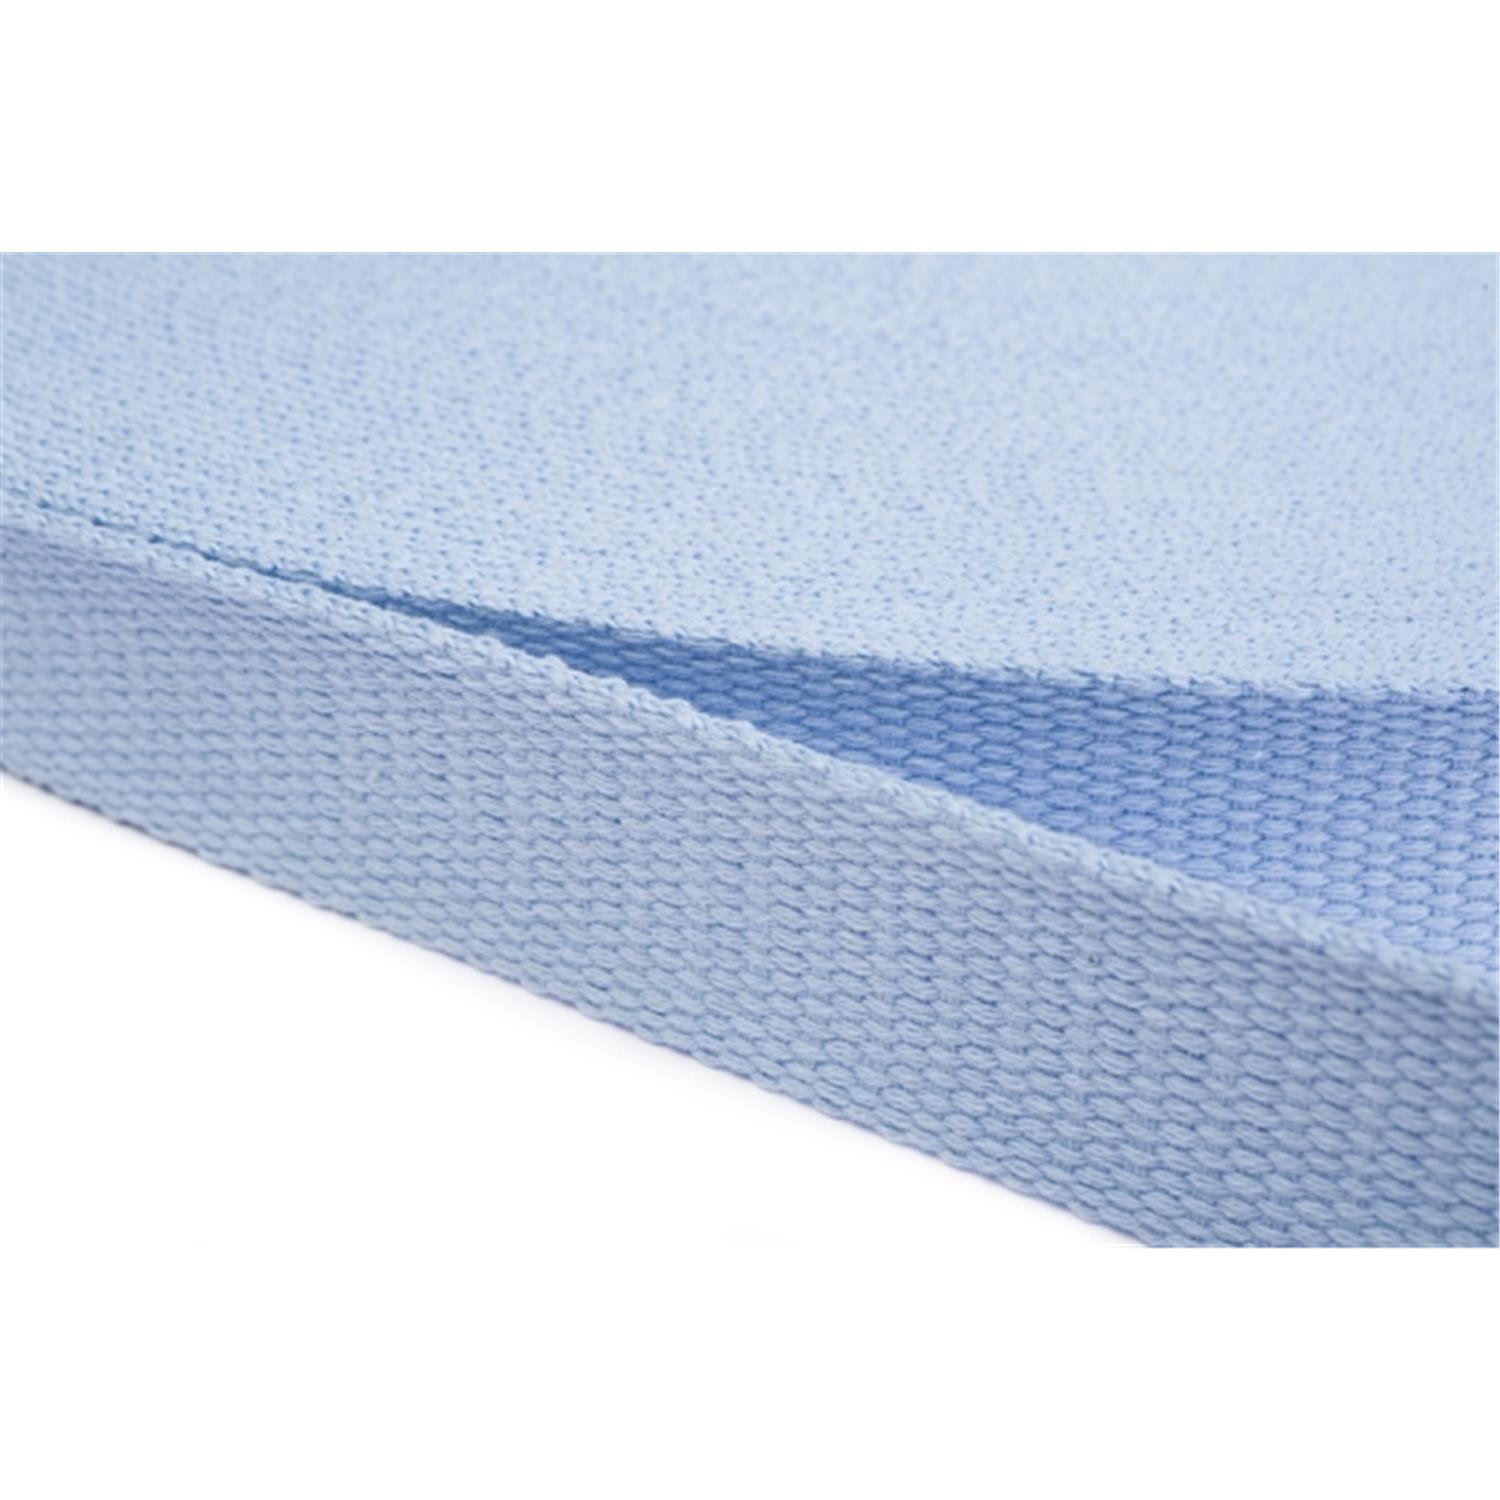 Gurtband aus Baumwolle 10mm in 20 Farben 11 - hellblau 6 Meter